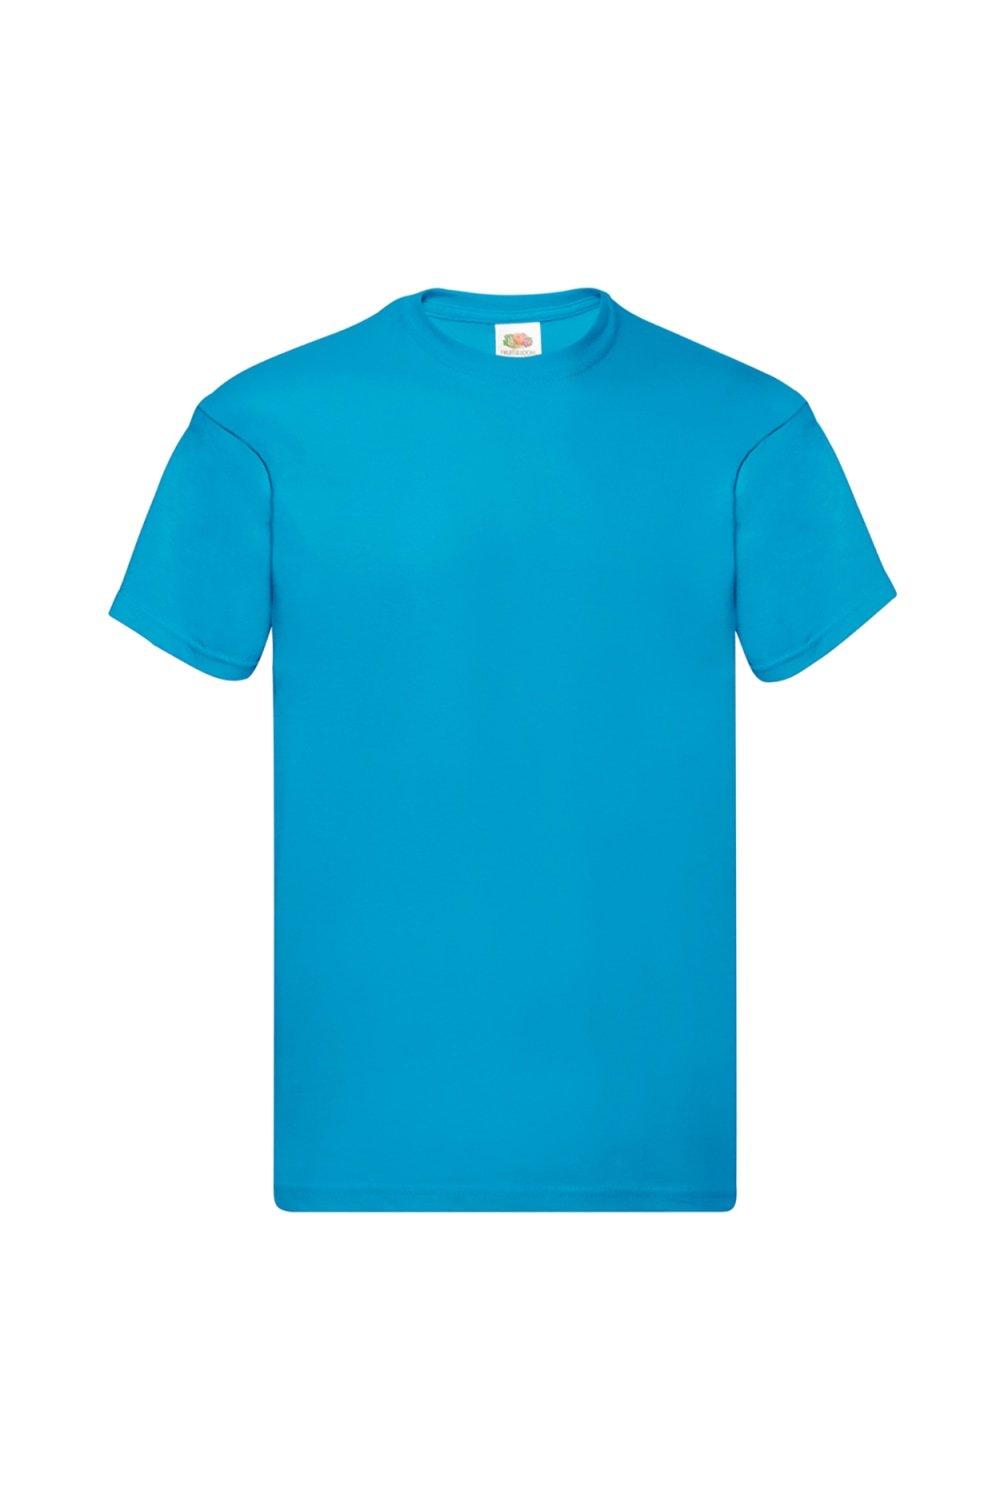 Оригинальная футболка с коротким рукавом Fruit of the Loom, синий